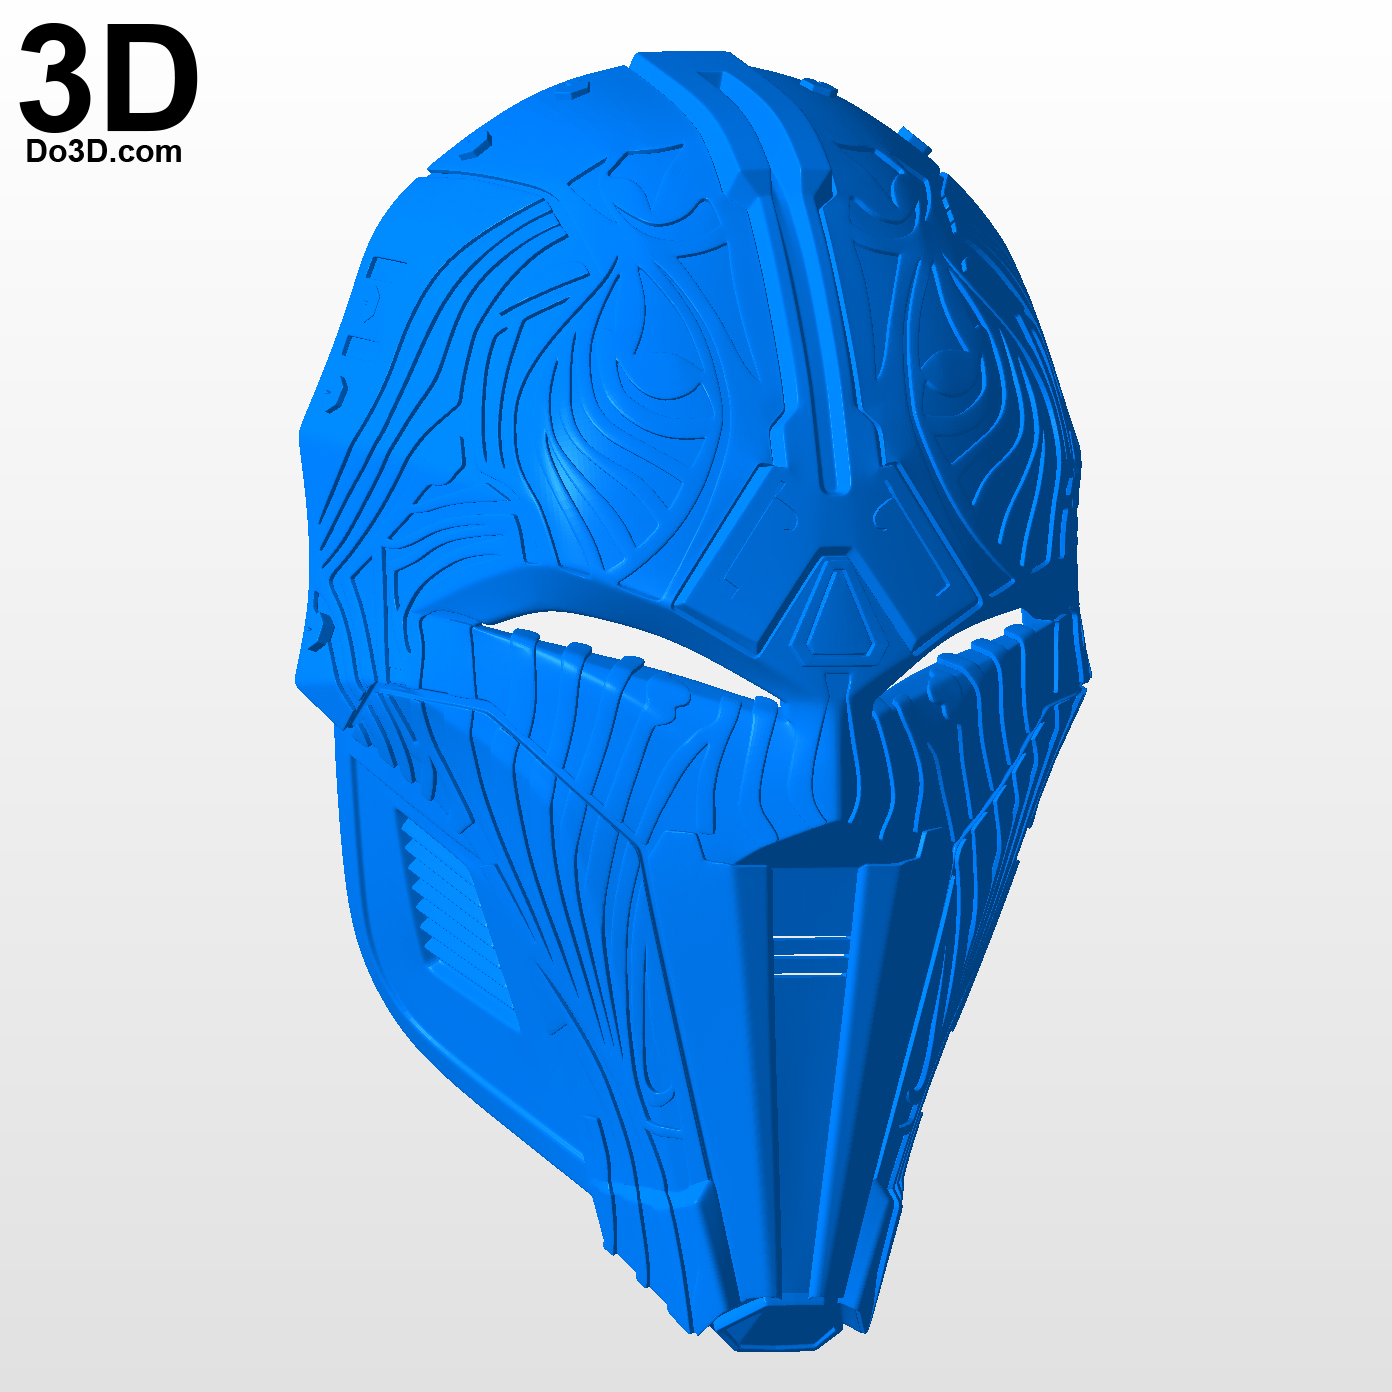 3D Printable Model: Sith Acolyte Star Wars Helmet Mask | Print File ...
